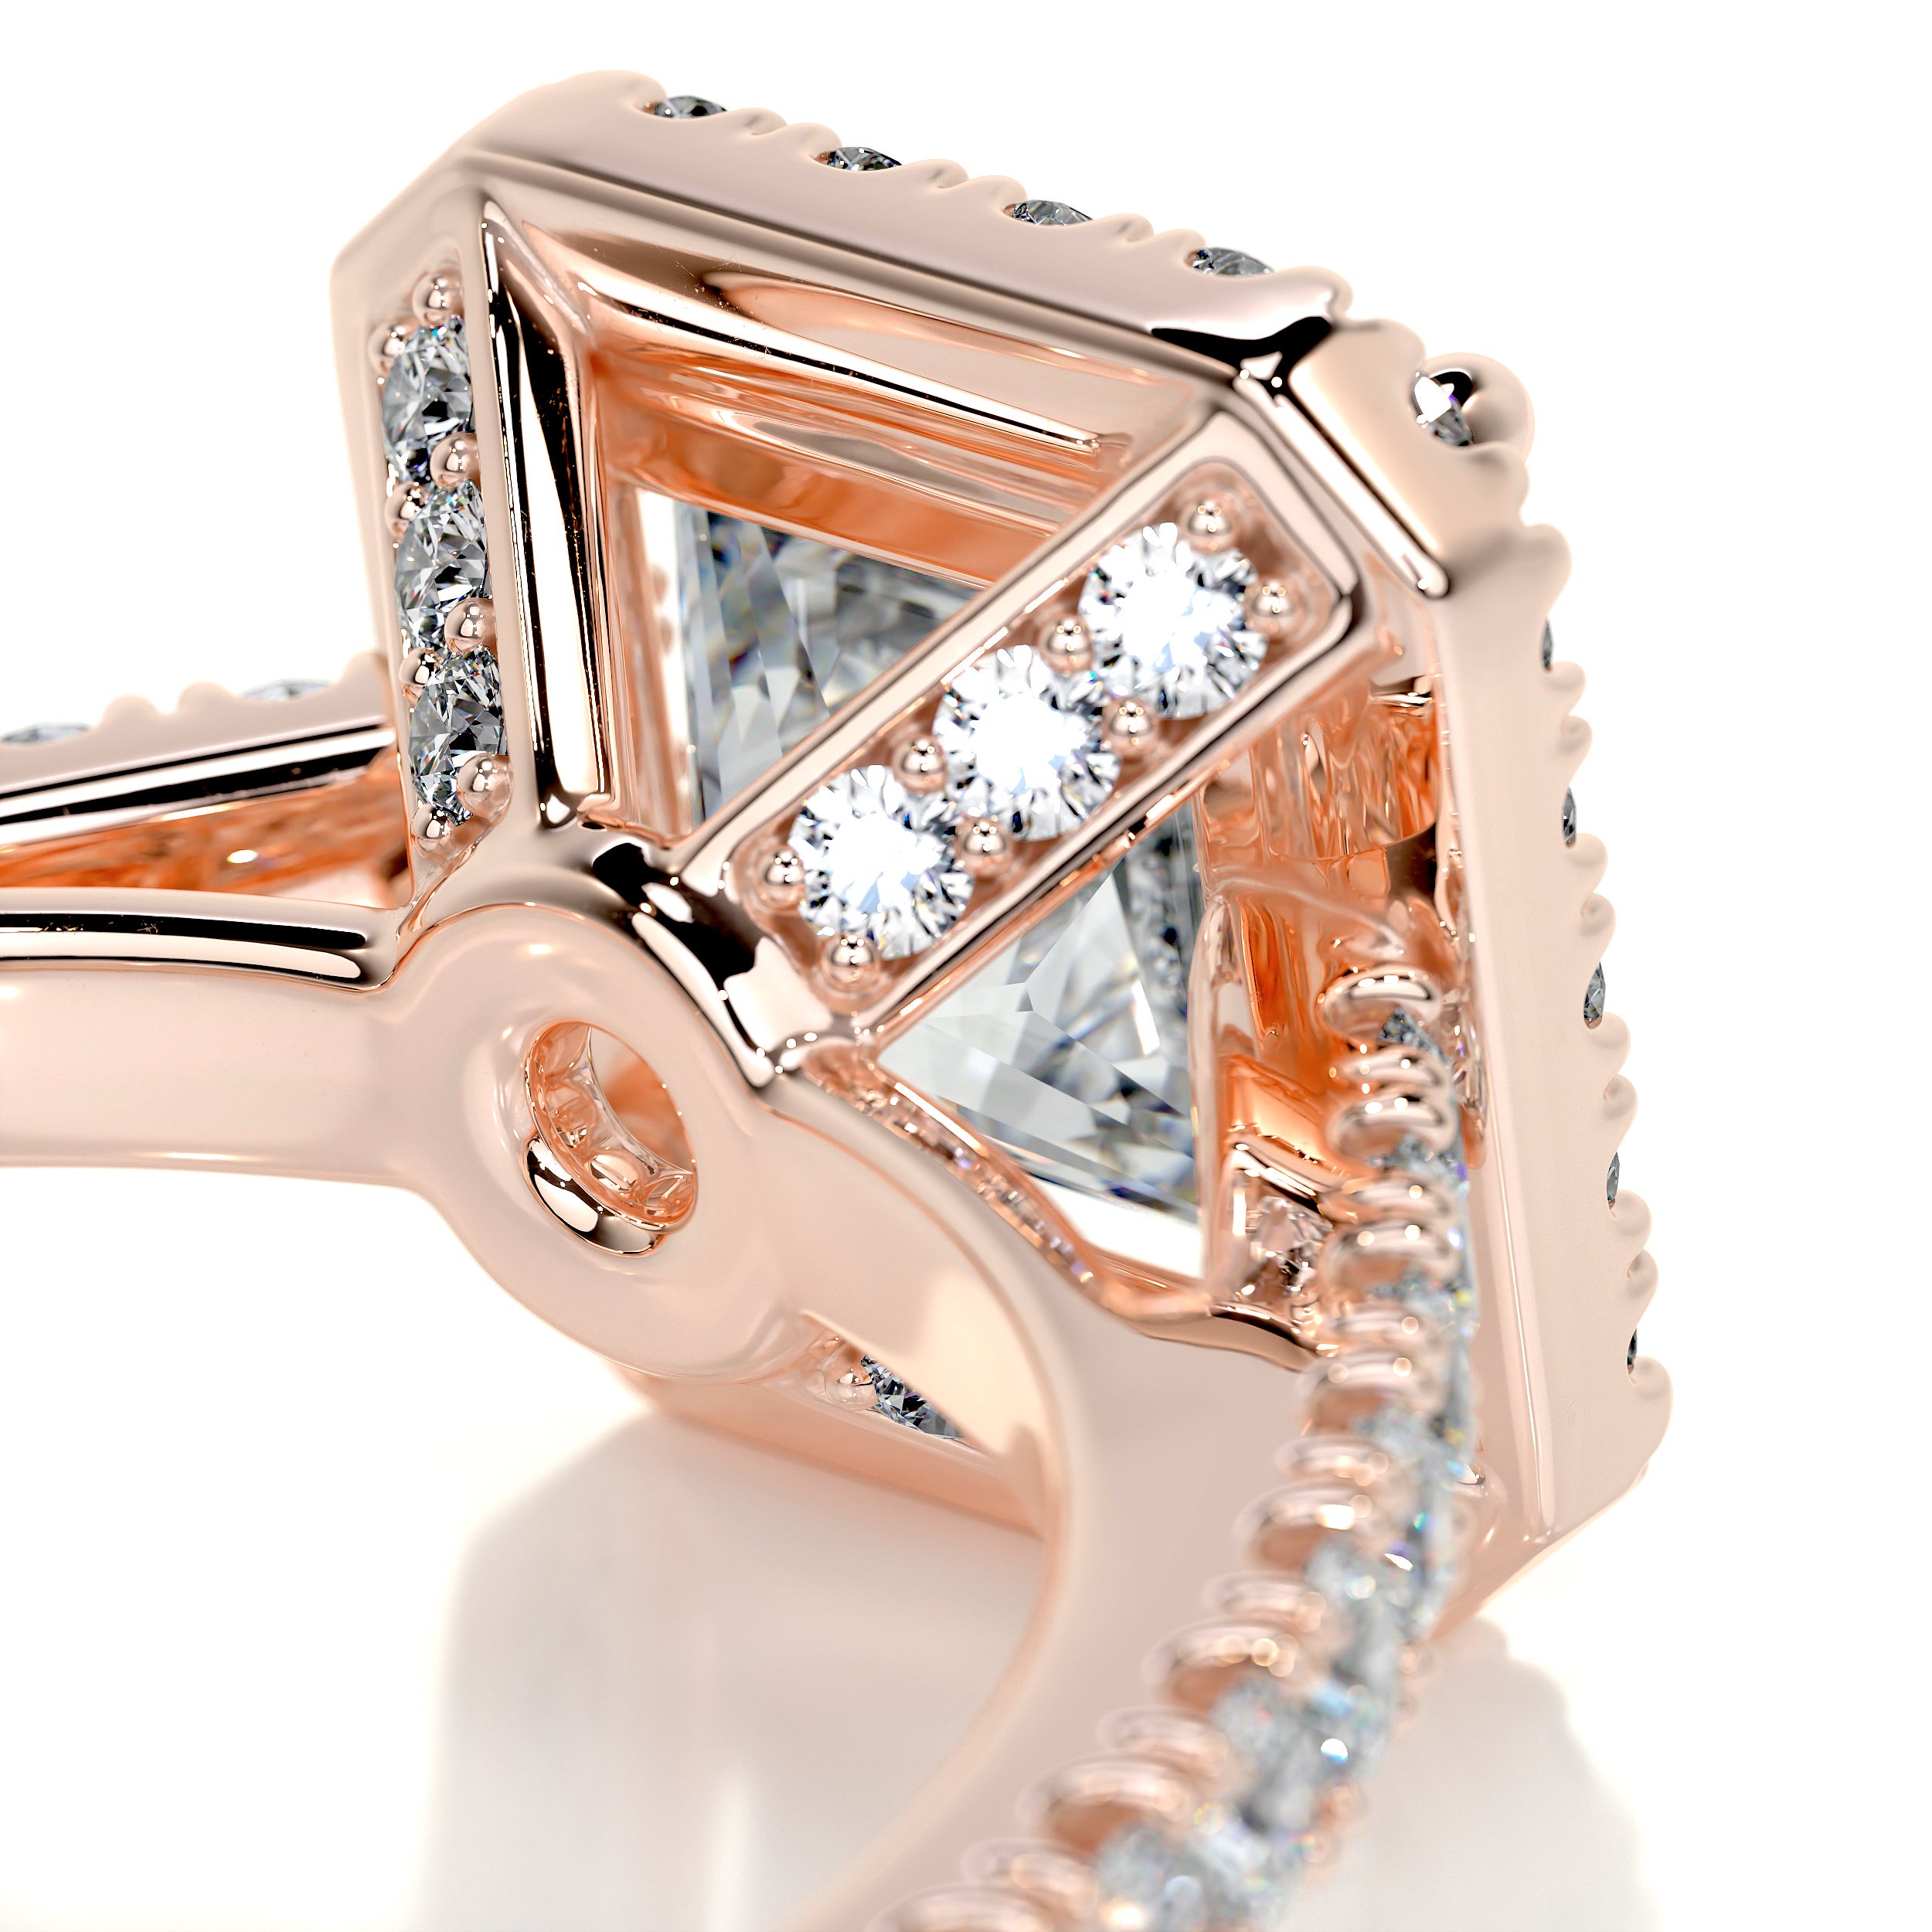 Selena Diamond Engagement Ring -14K Rose Gold